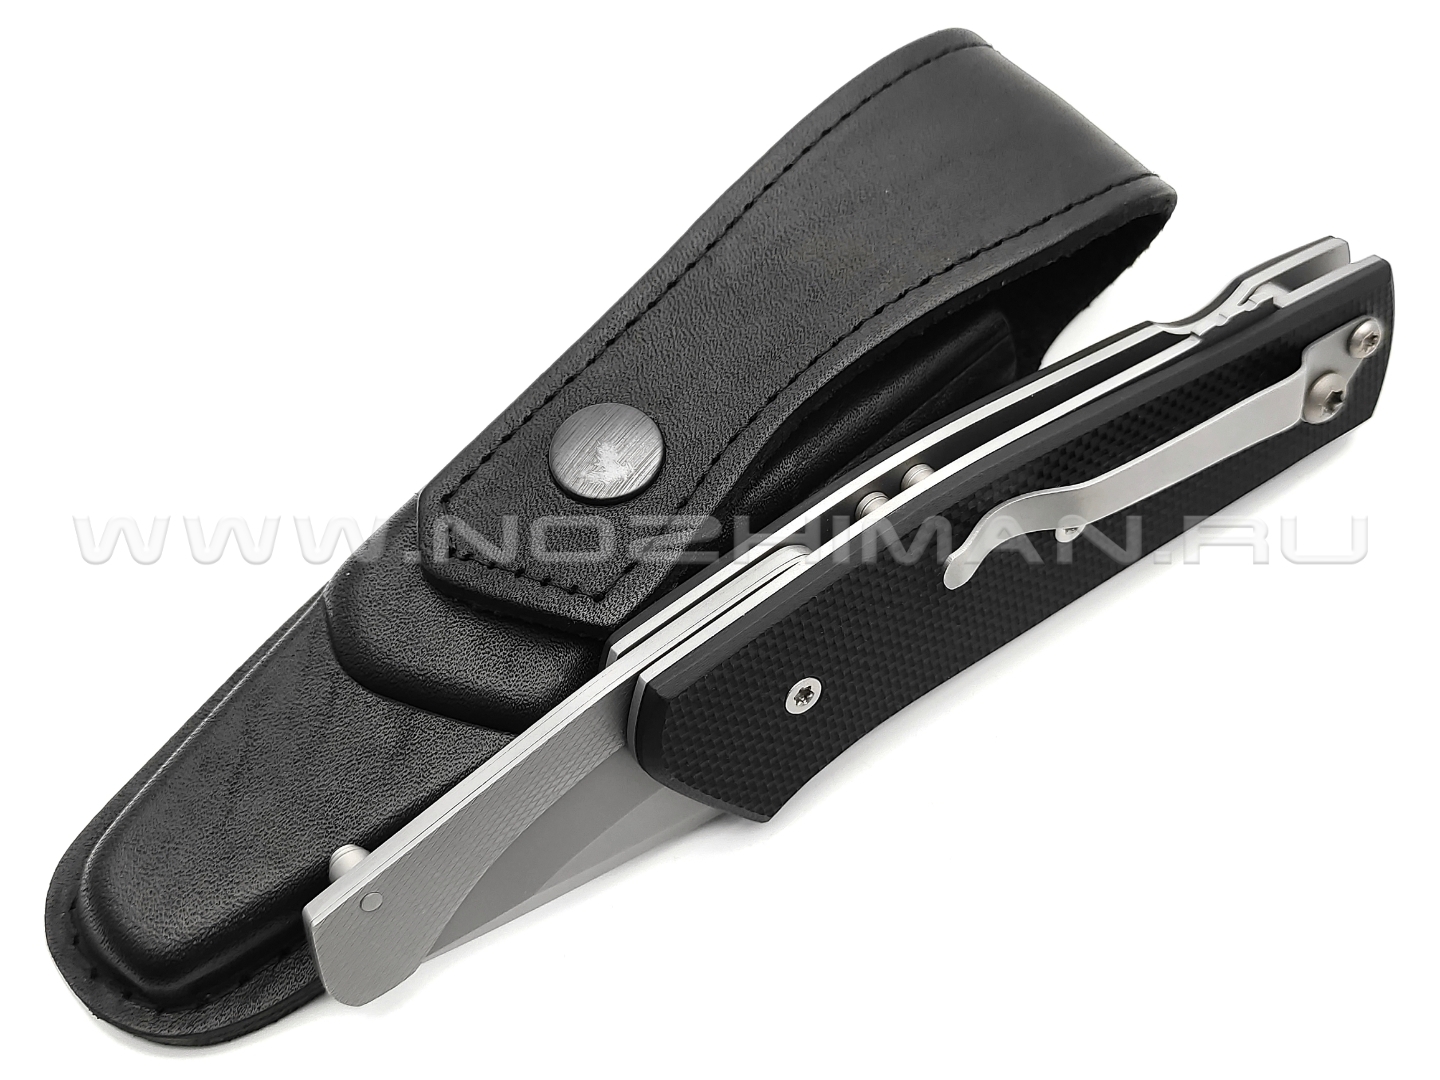 Saro нож Wild West сталь Aus10 bead-blast, рукоять G10 black